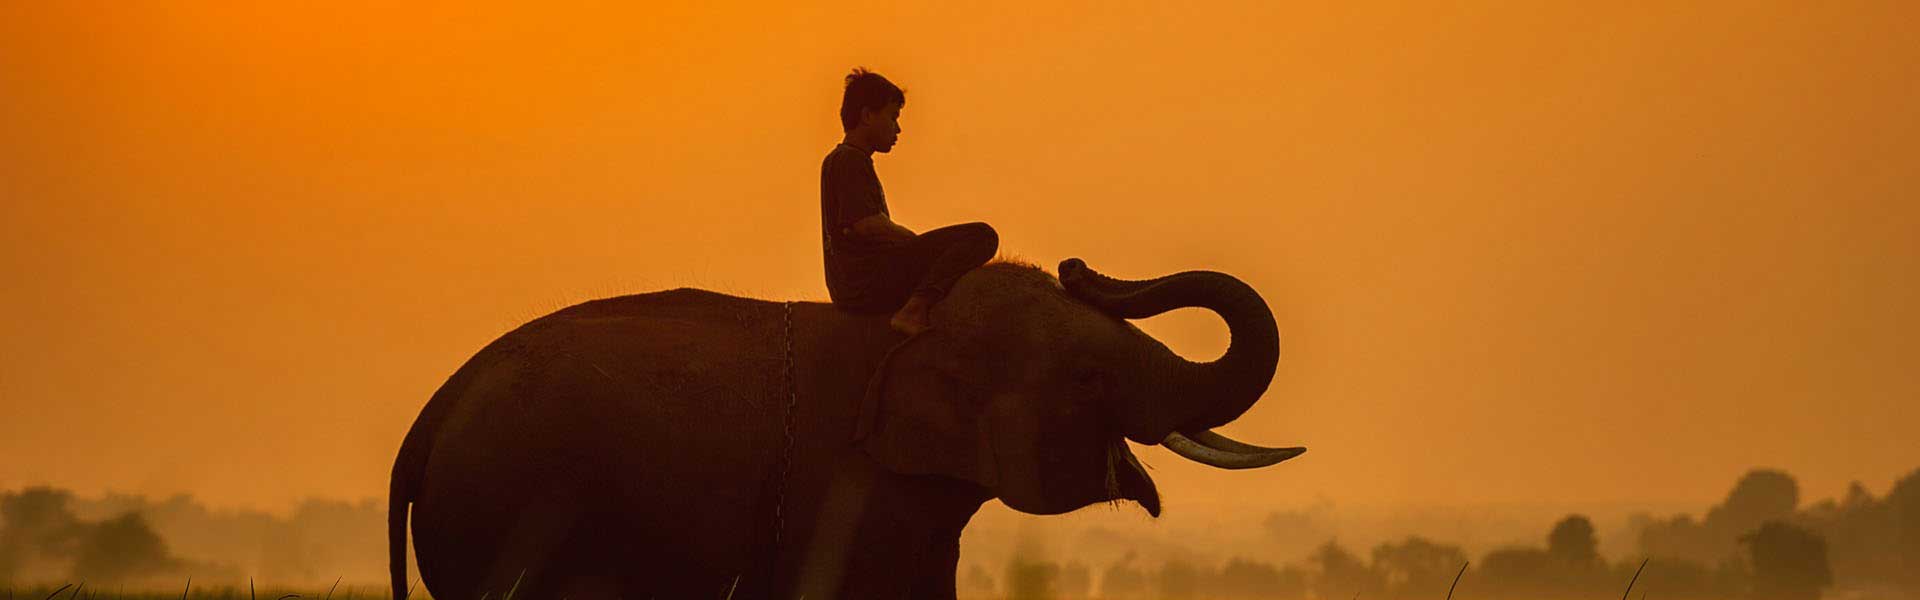 Voyage Sri-Lanka : Cornac sur son elephant